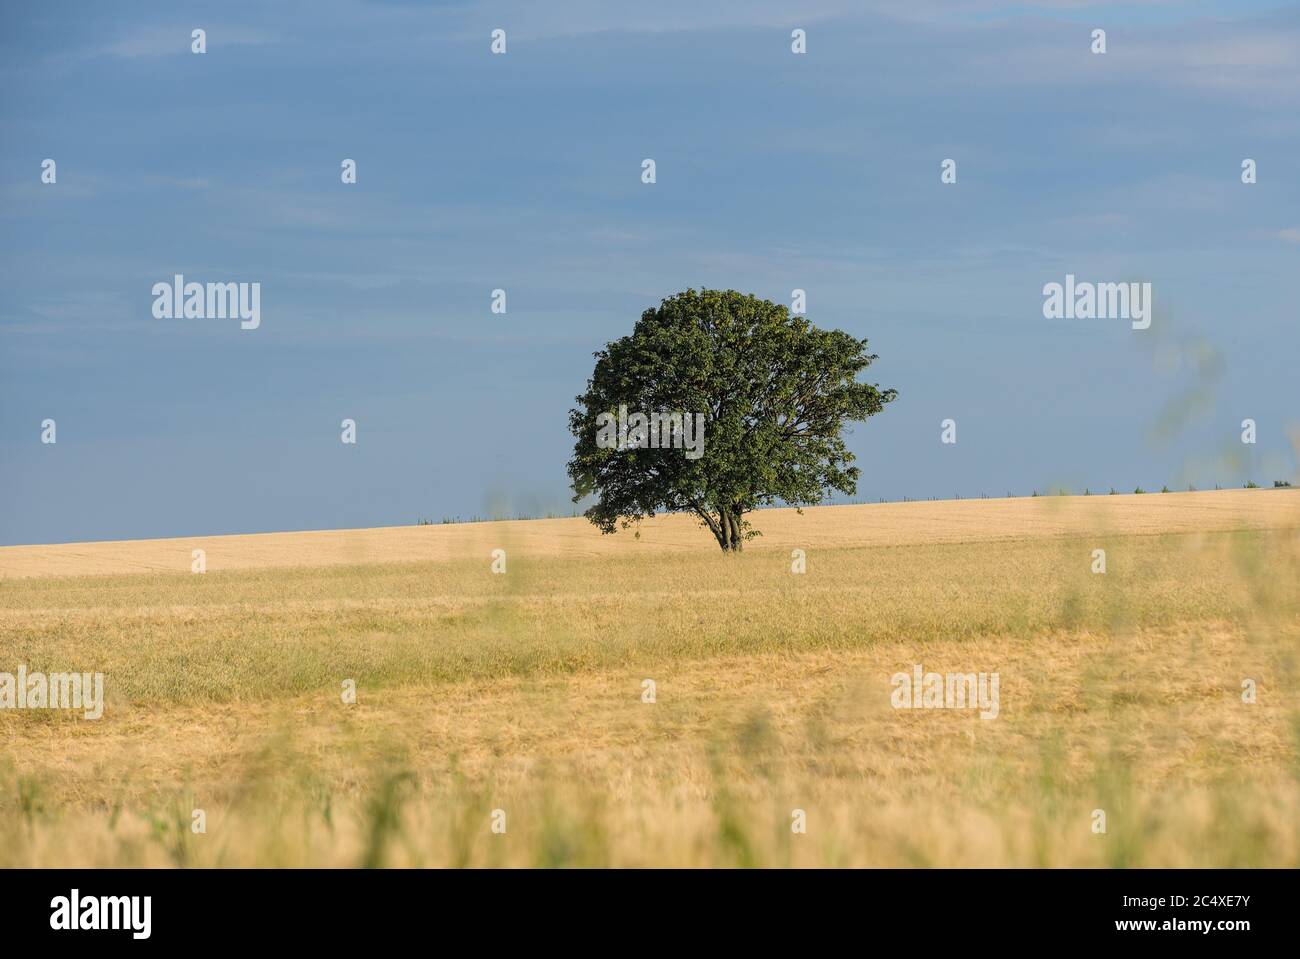 Einsamer Baum im Getreidefeld Foto Stock